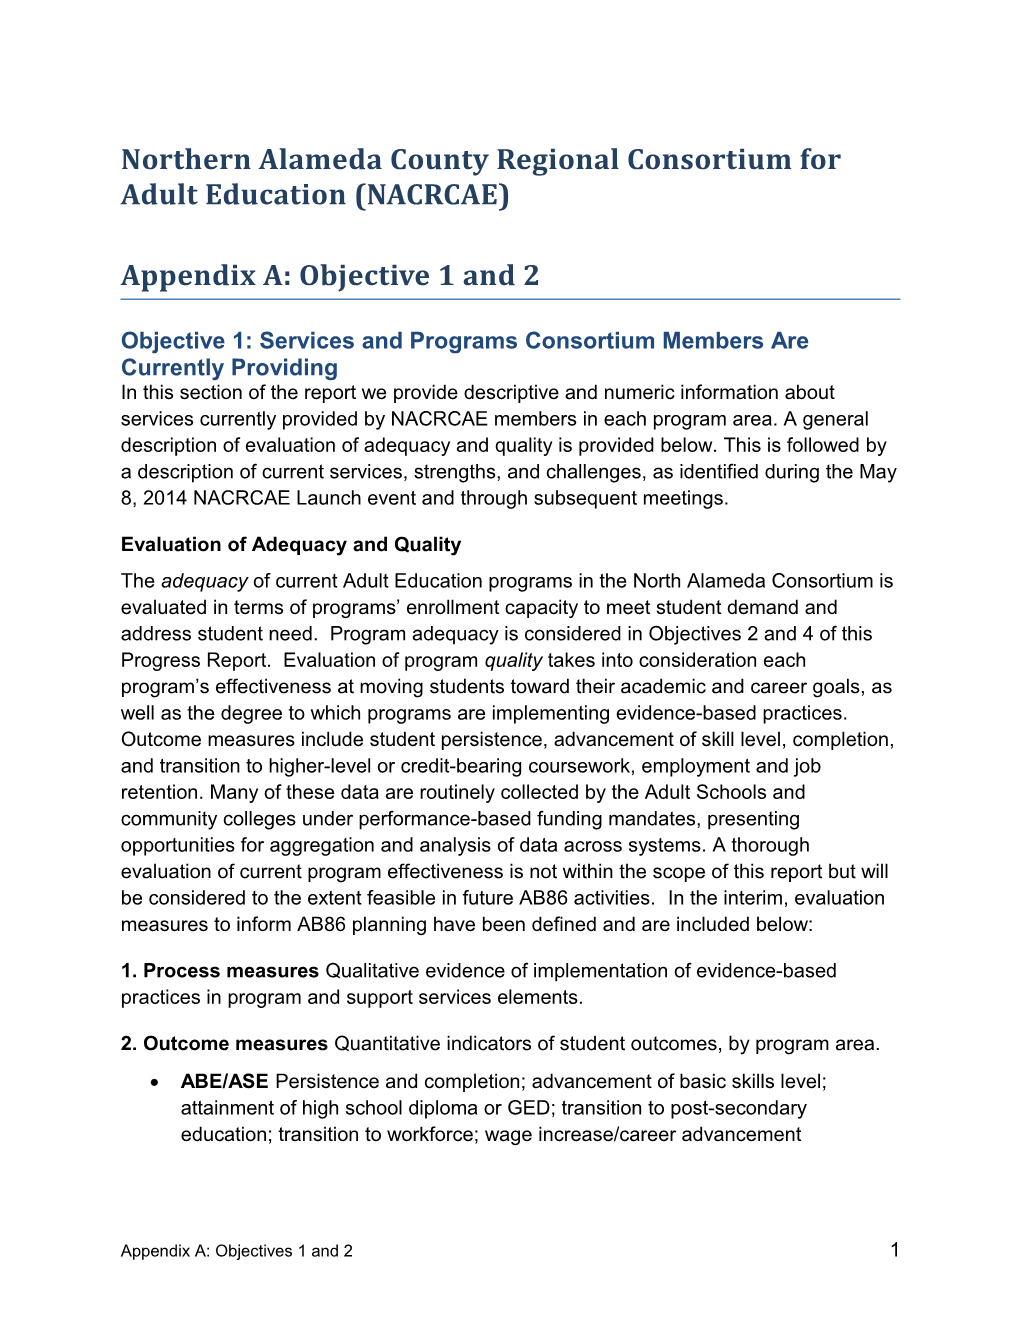 Northern Alameda County Regional Consortium for Adult Education (NACRCAE)